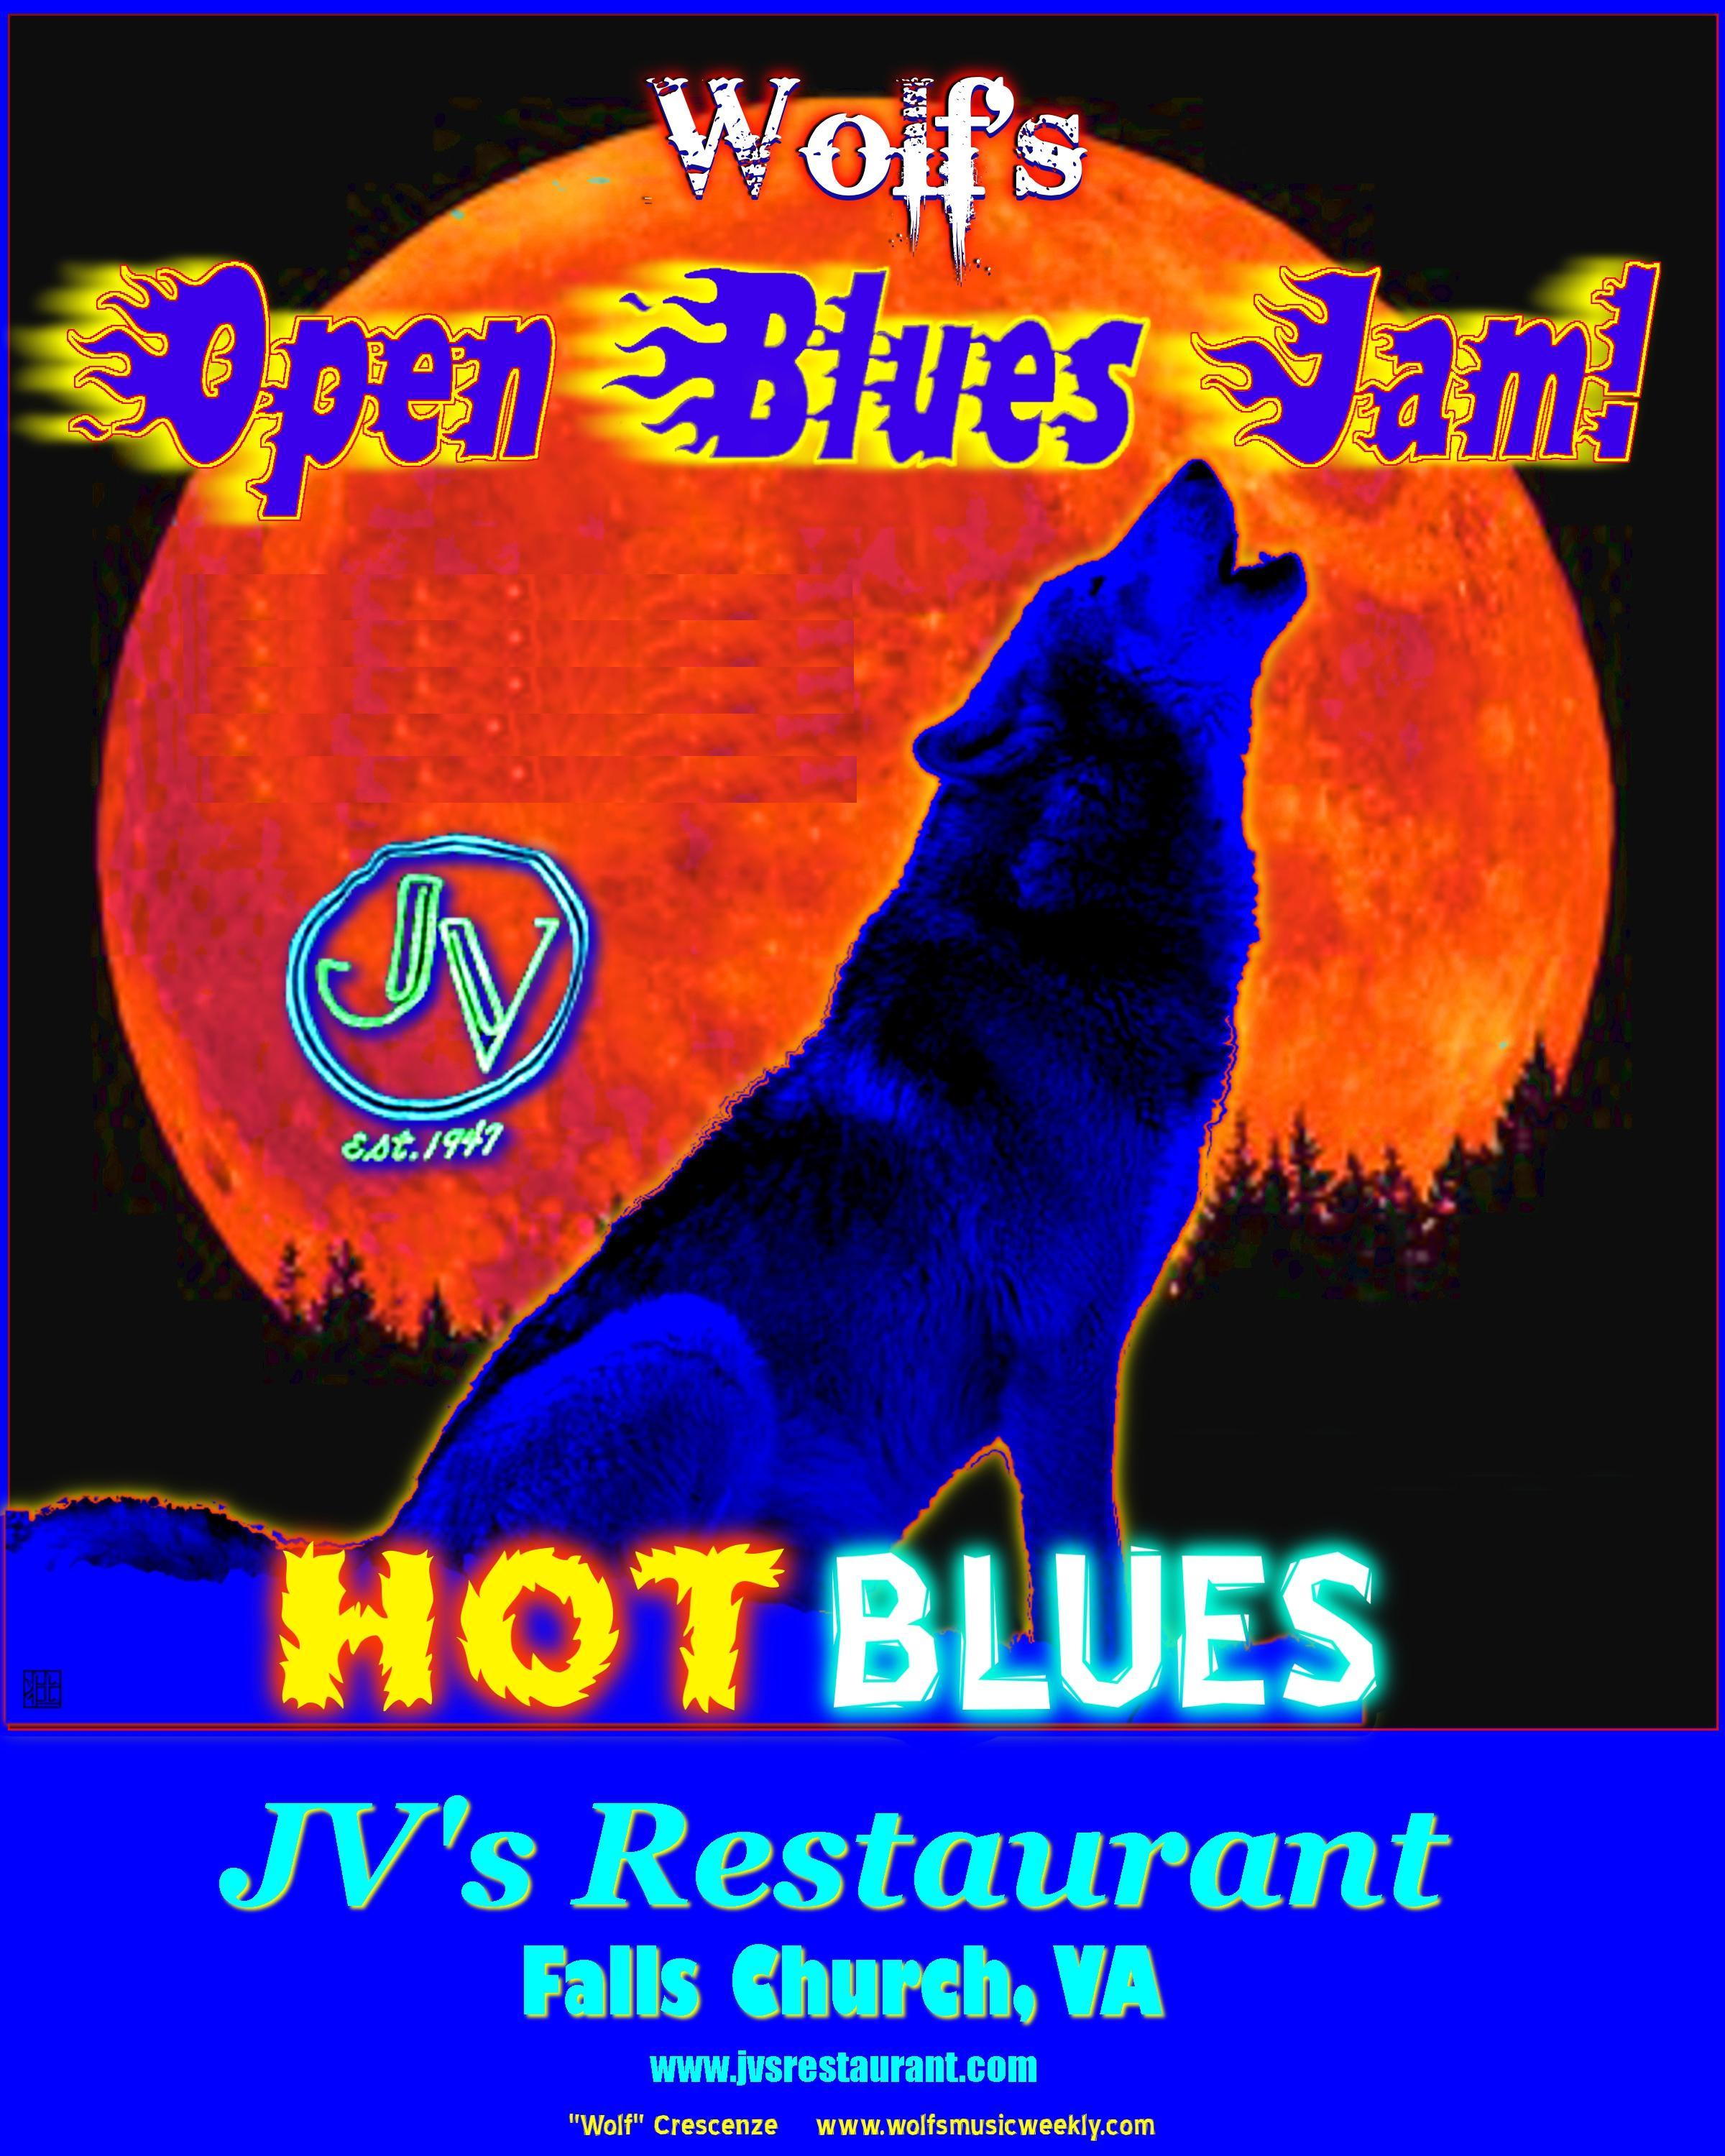 BluesJamspics/WOLFSjvsnodatebluesjamposter.jpg